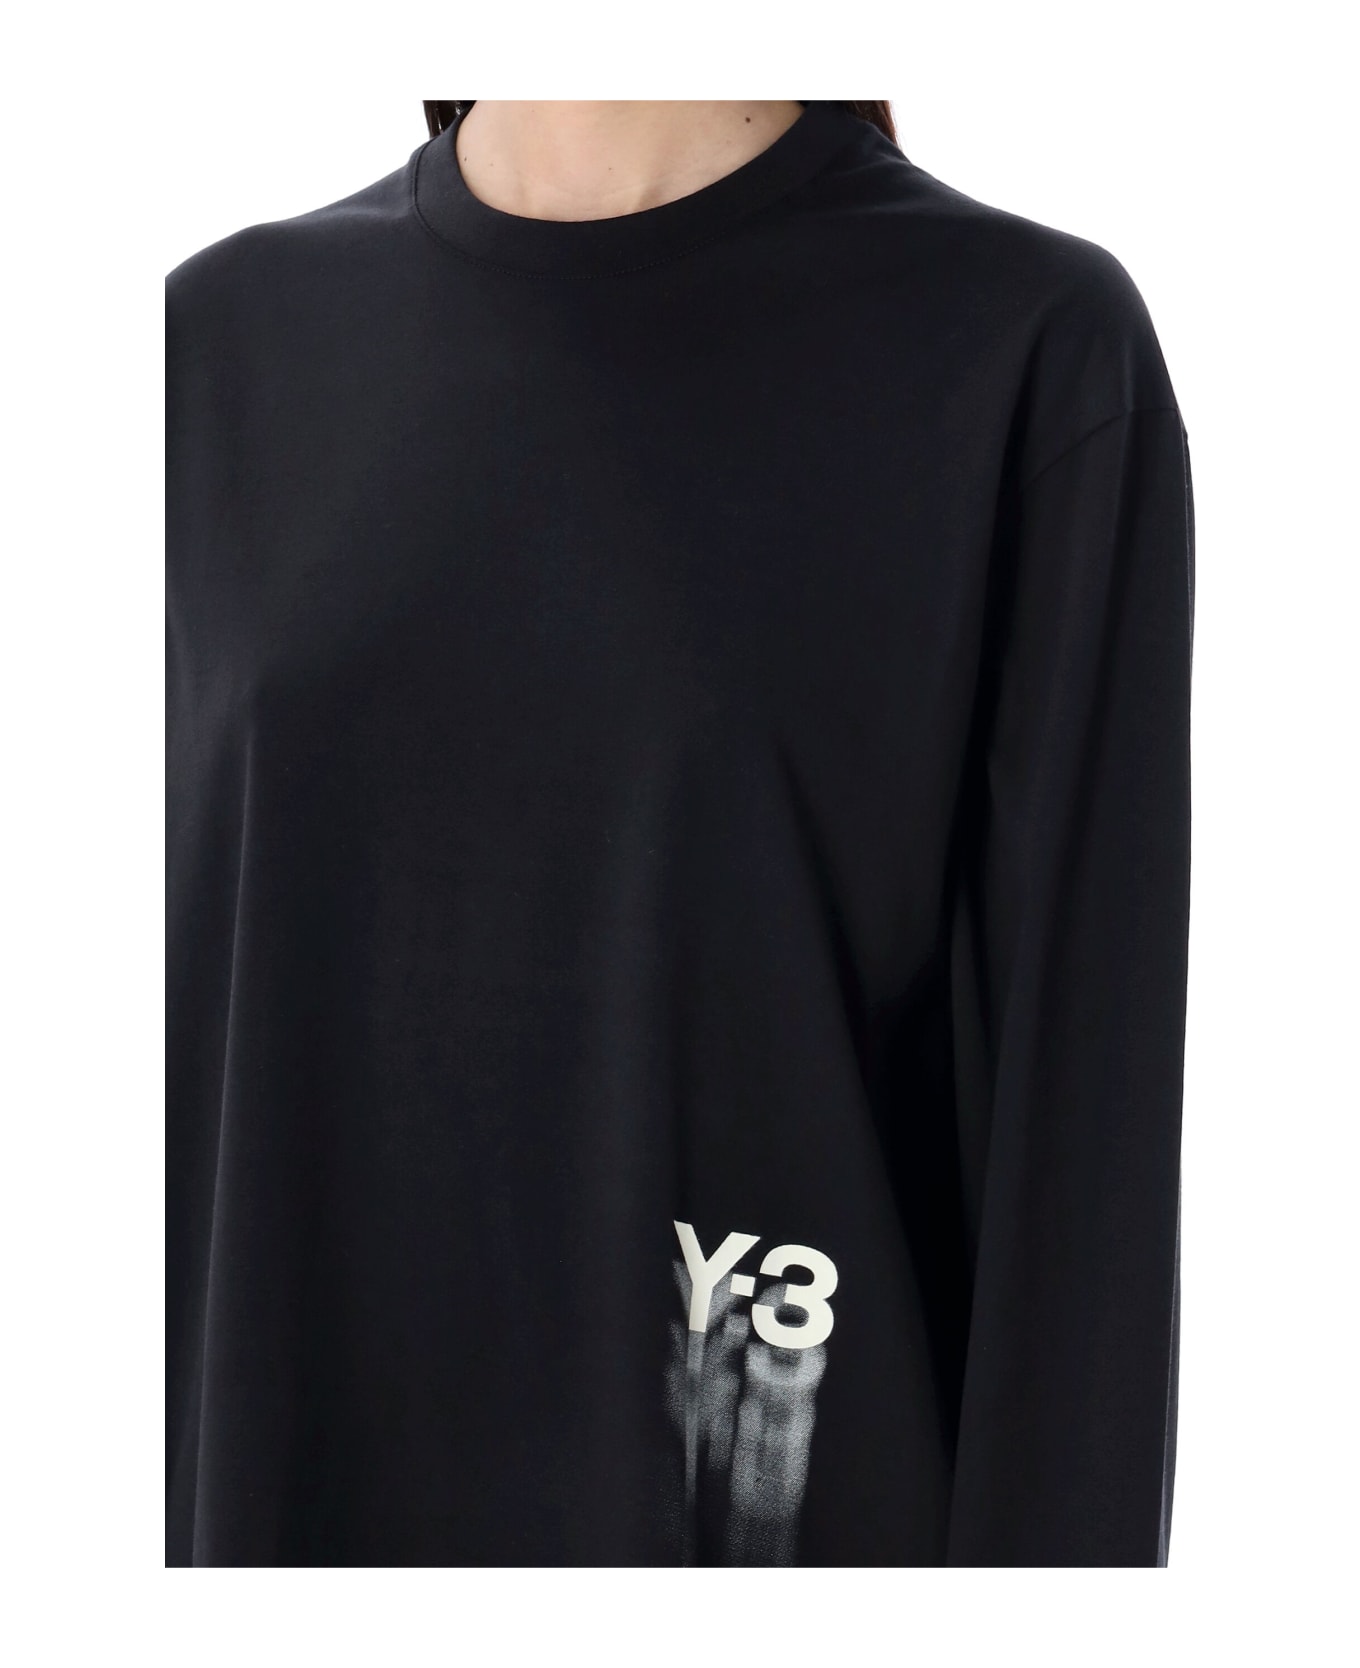 Y-3 Graphic Long Sleeves Tee - BLACK Tシャツ